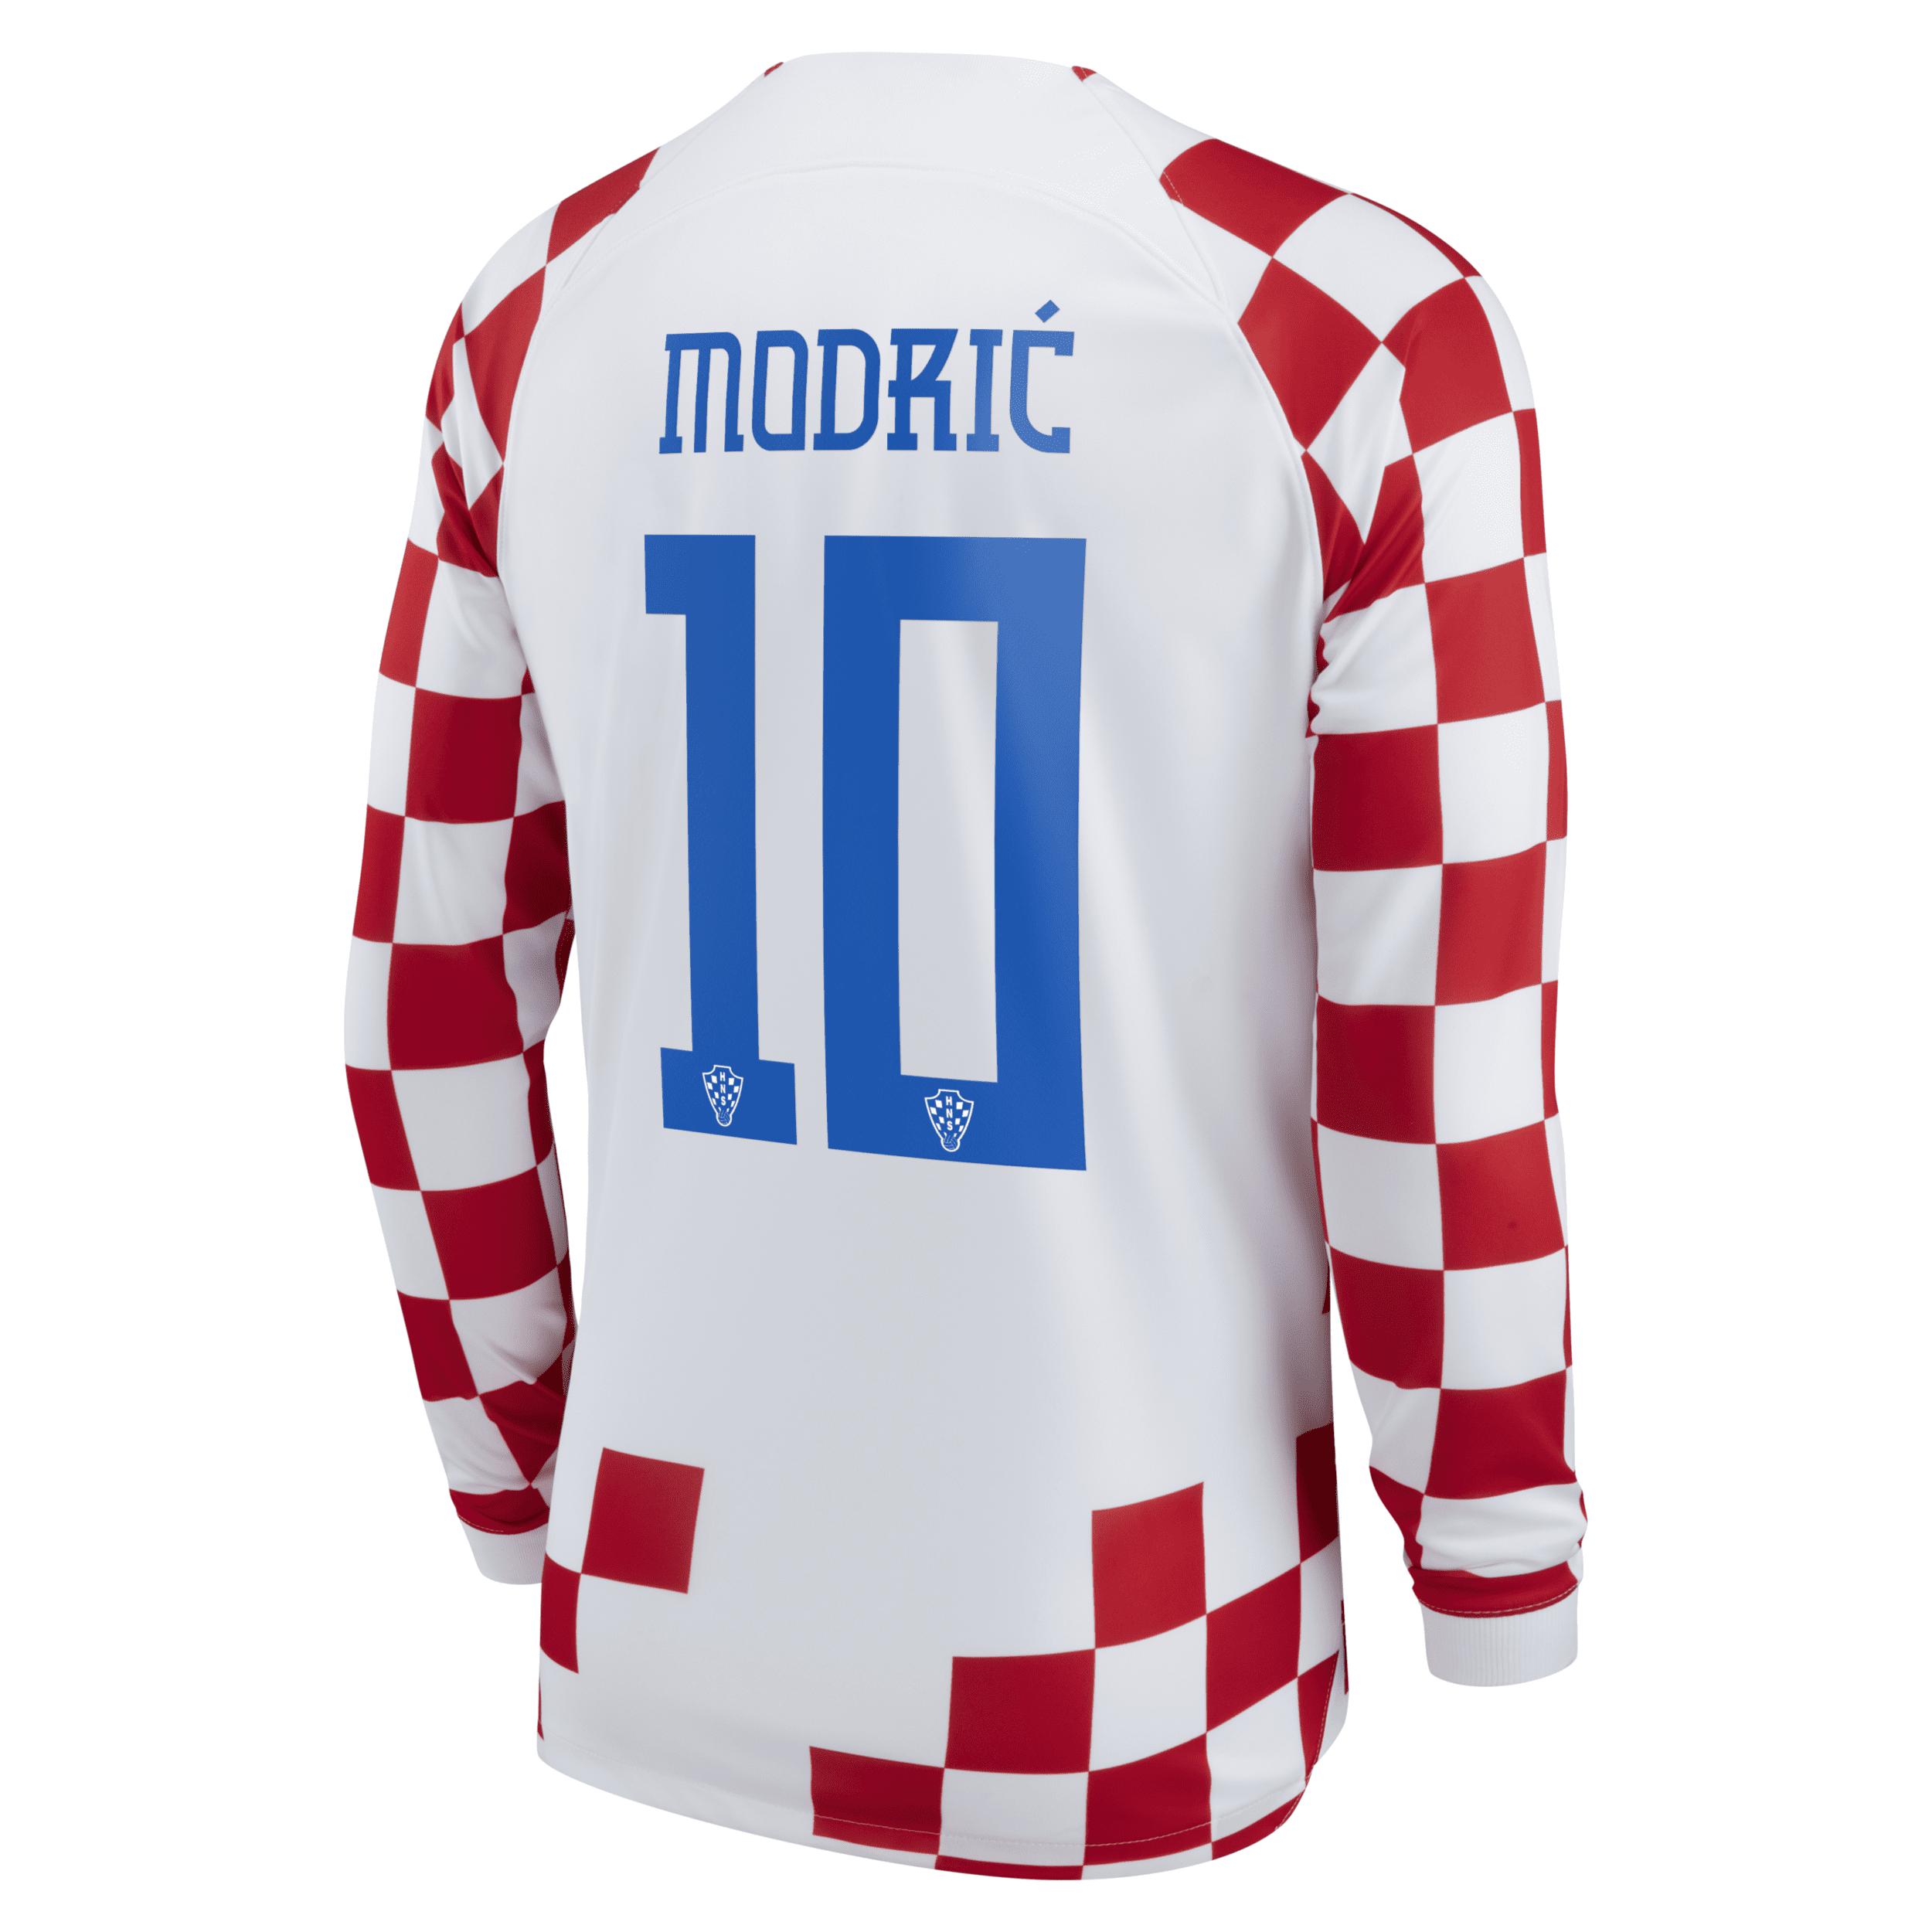 modric croatia soccer jersey